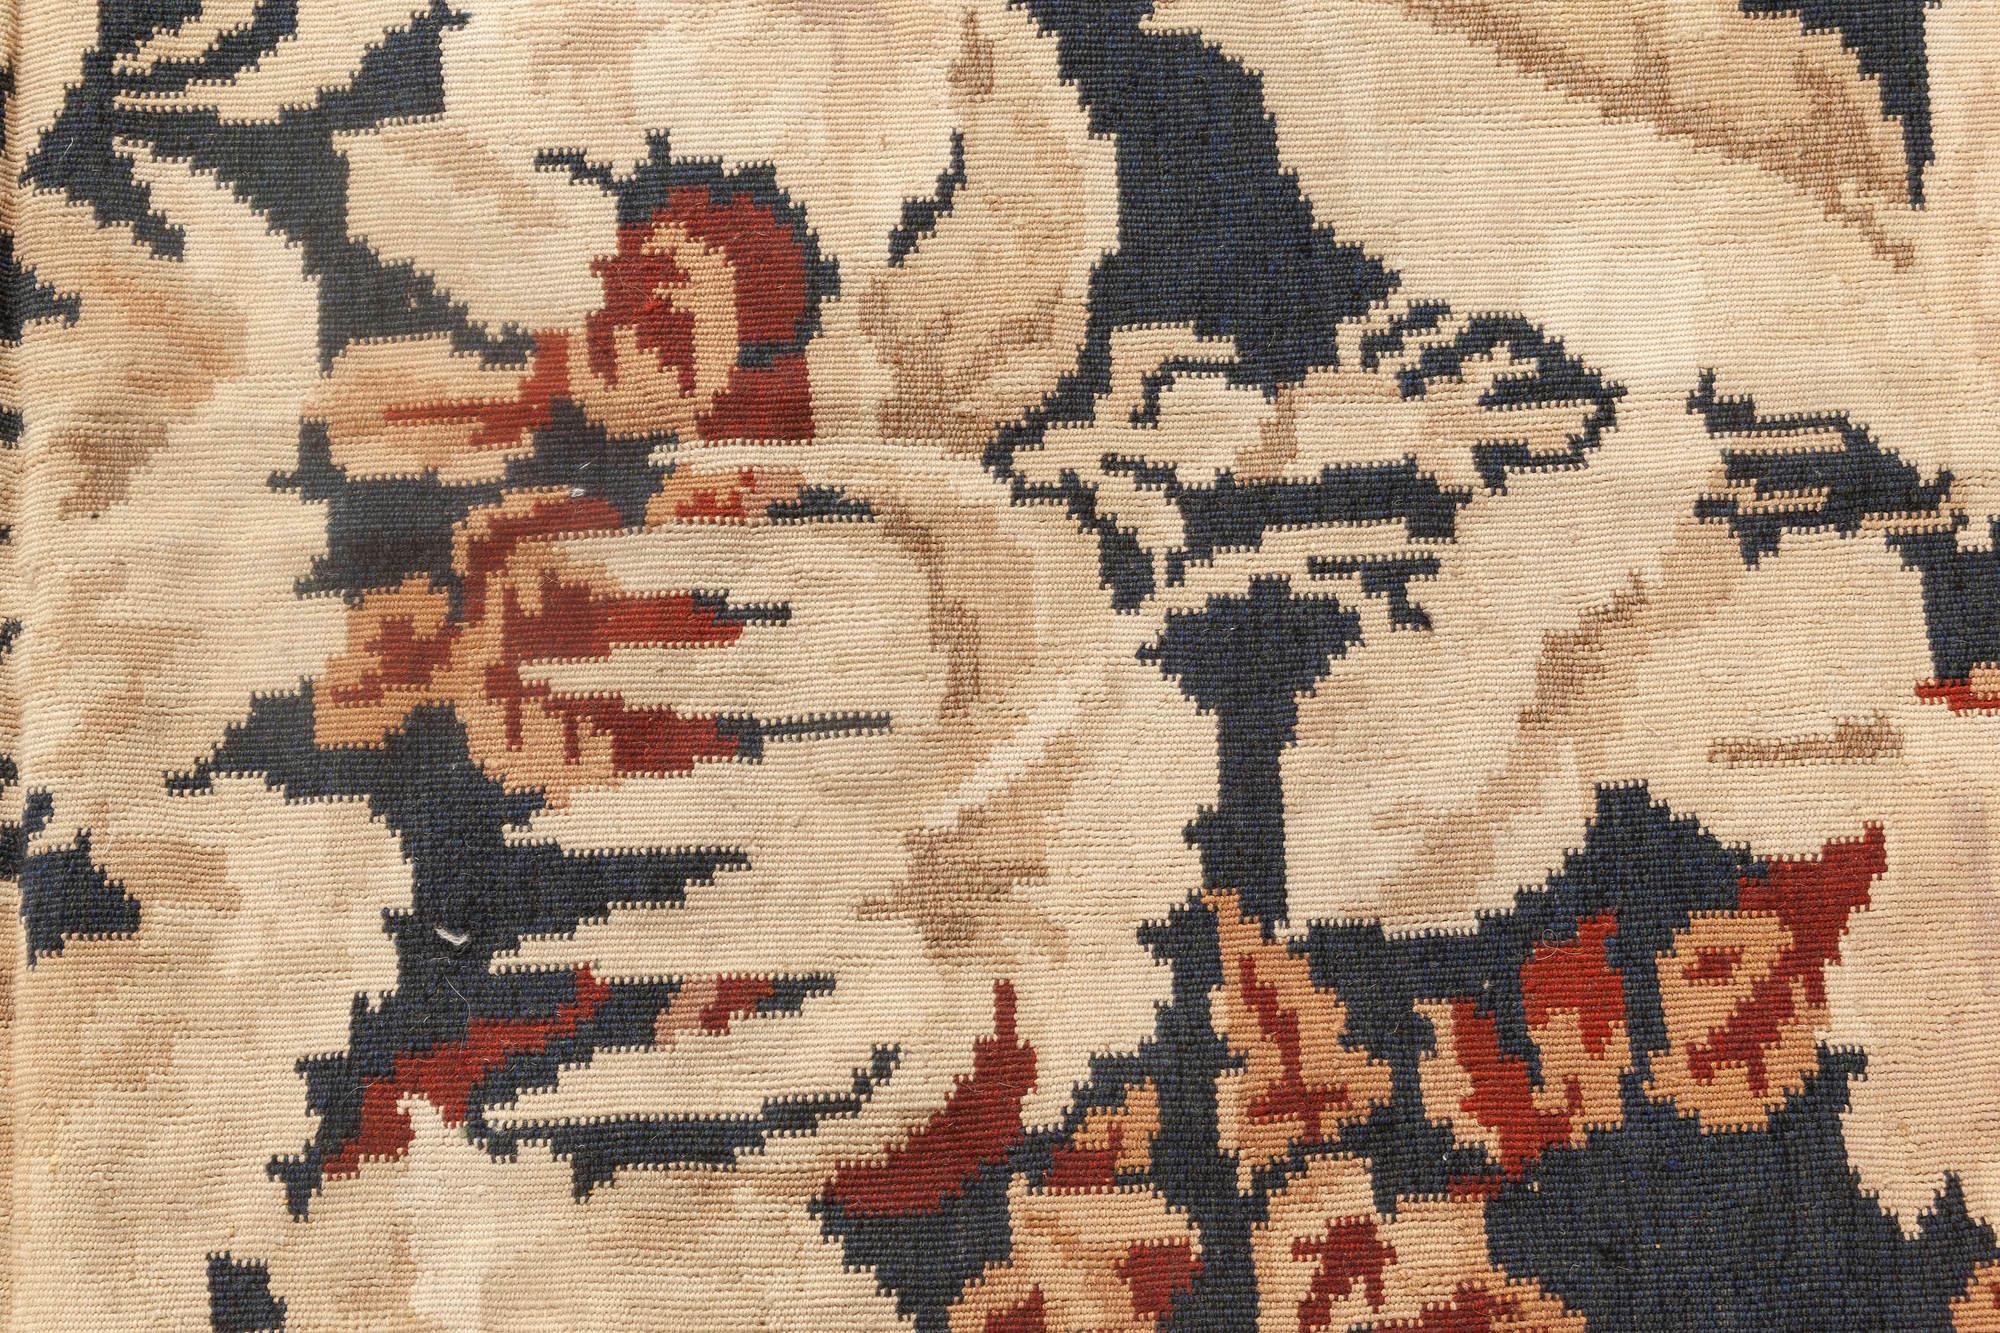 Chinese Contemporary Floral Bessarabian Design Handmade Wool Rug by Doris Leslie Blau For Sale